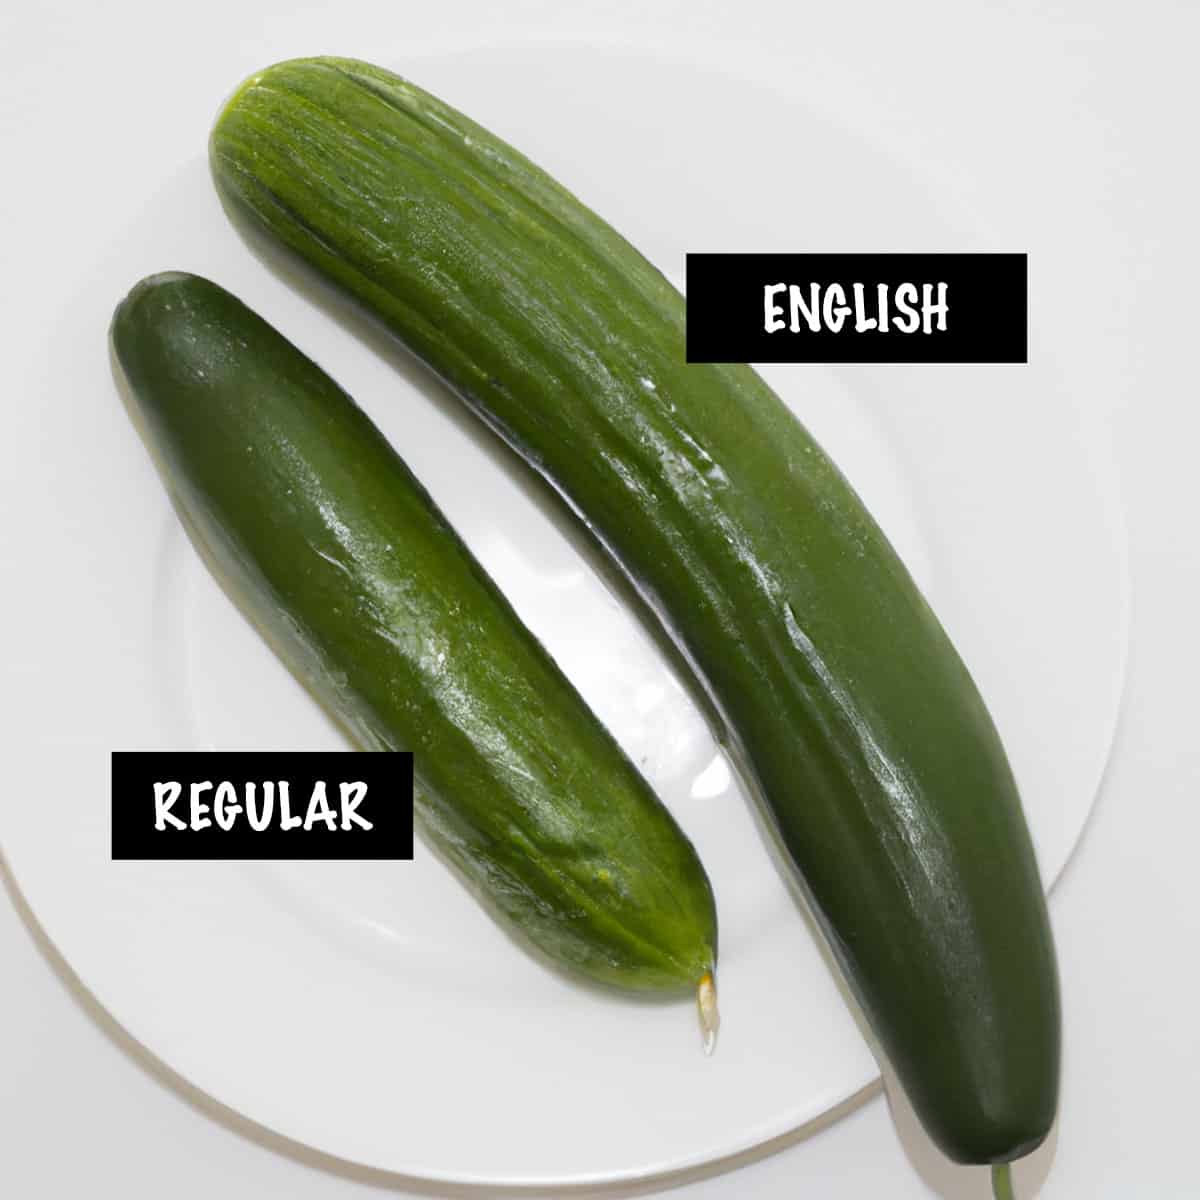 An English cucumber and a regular cucumber on a plate.